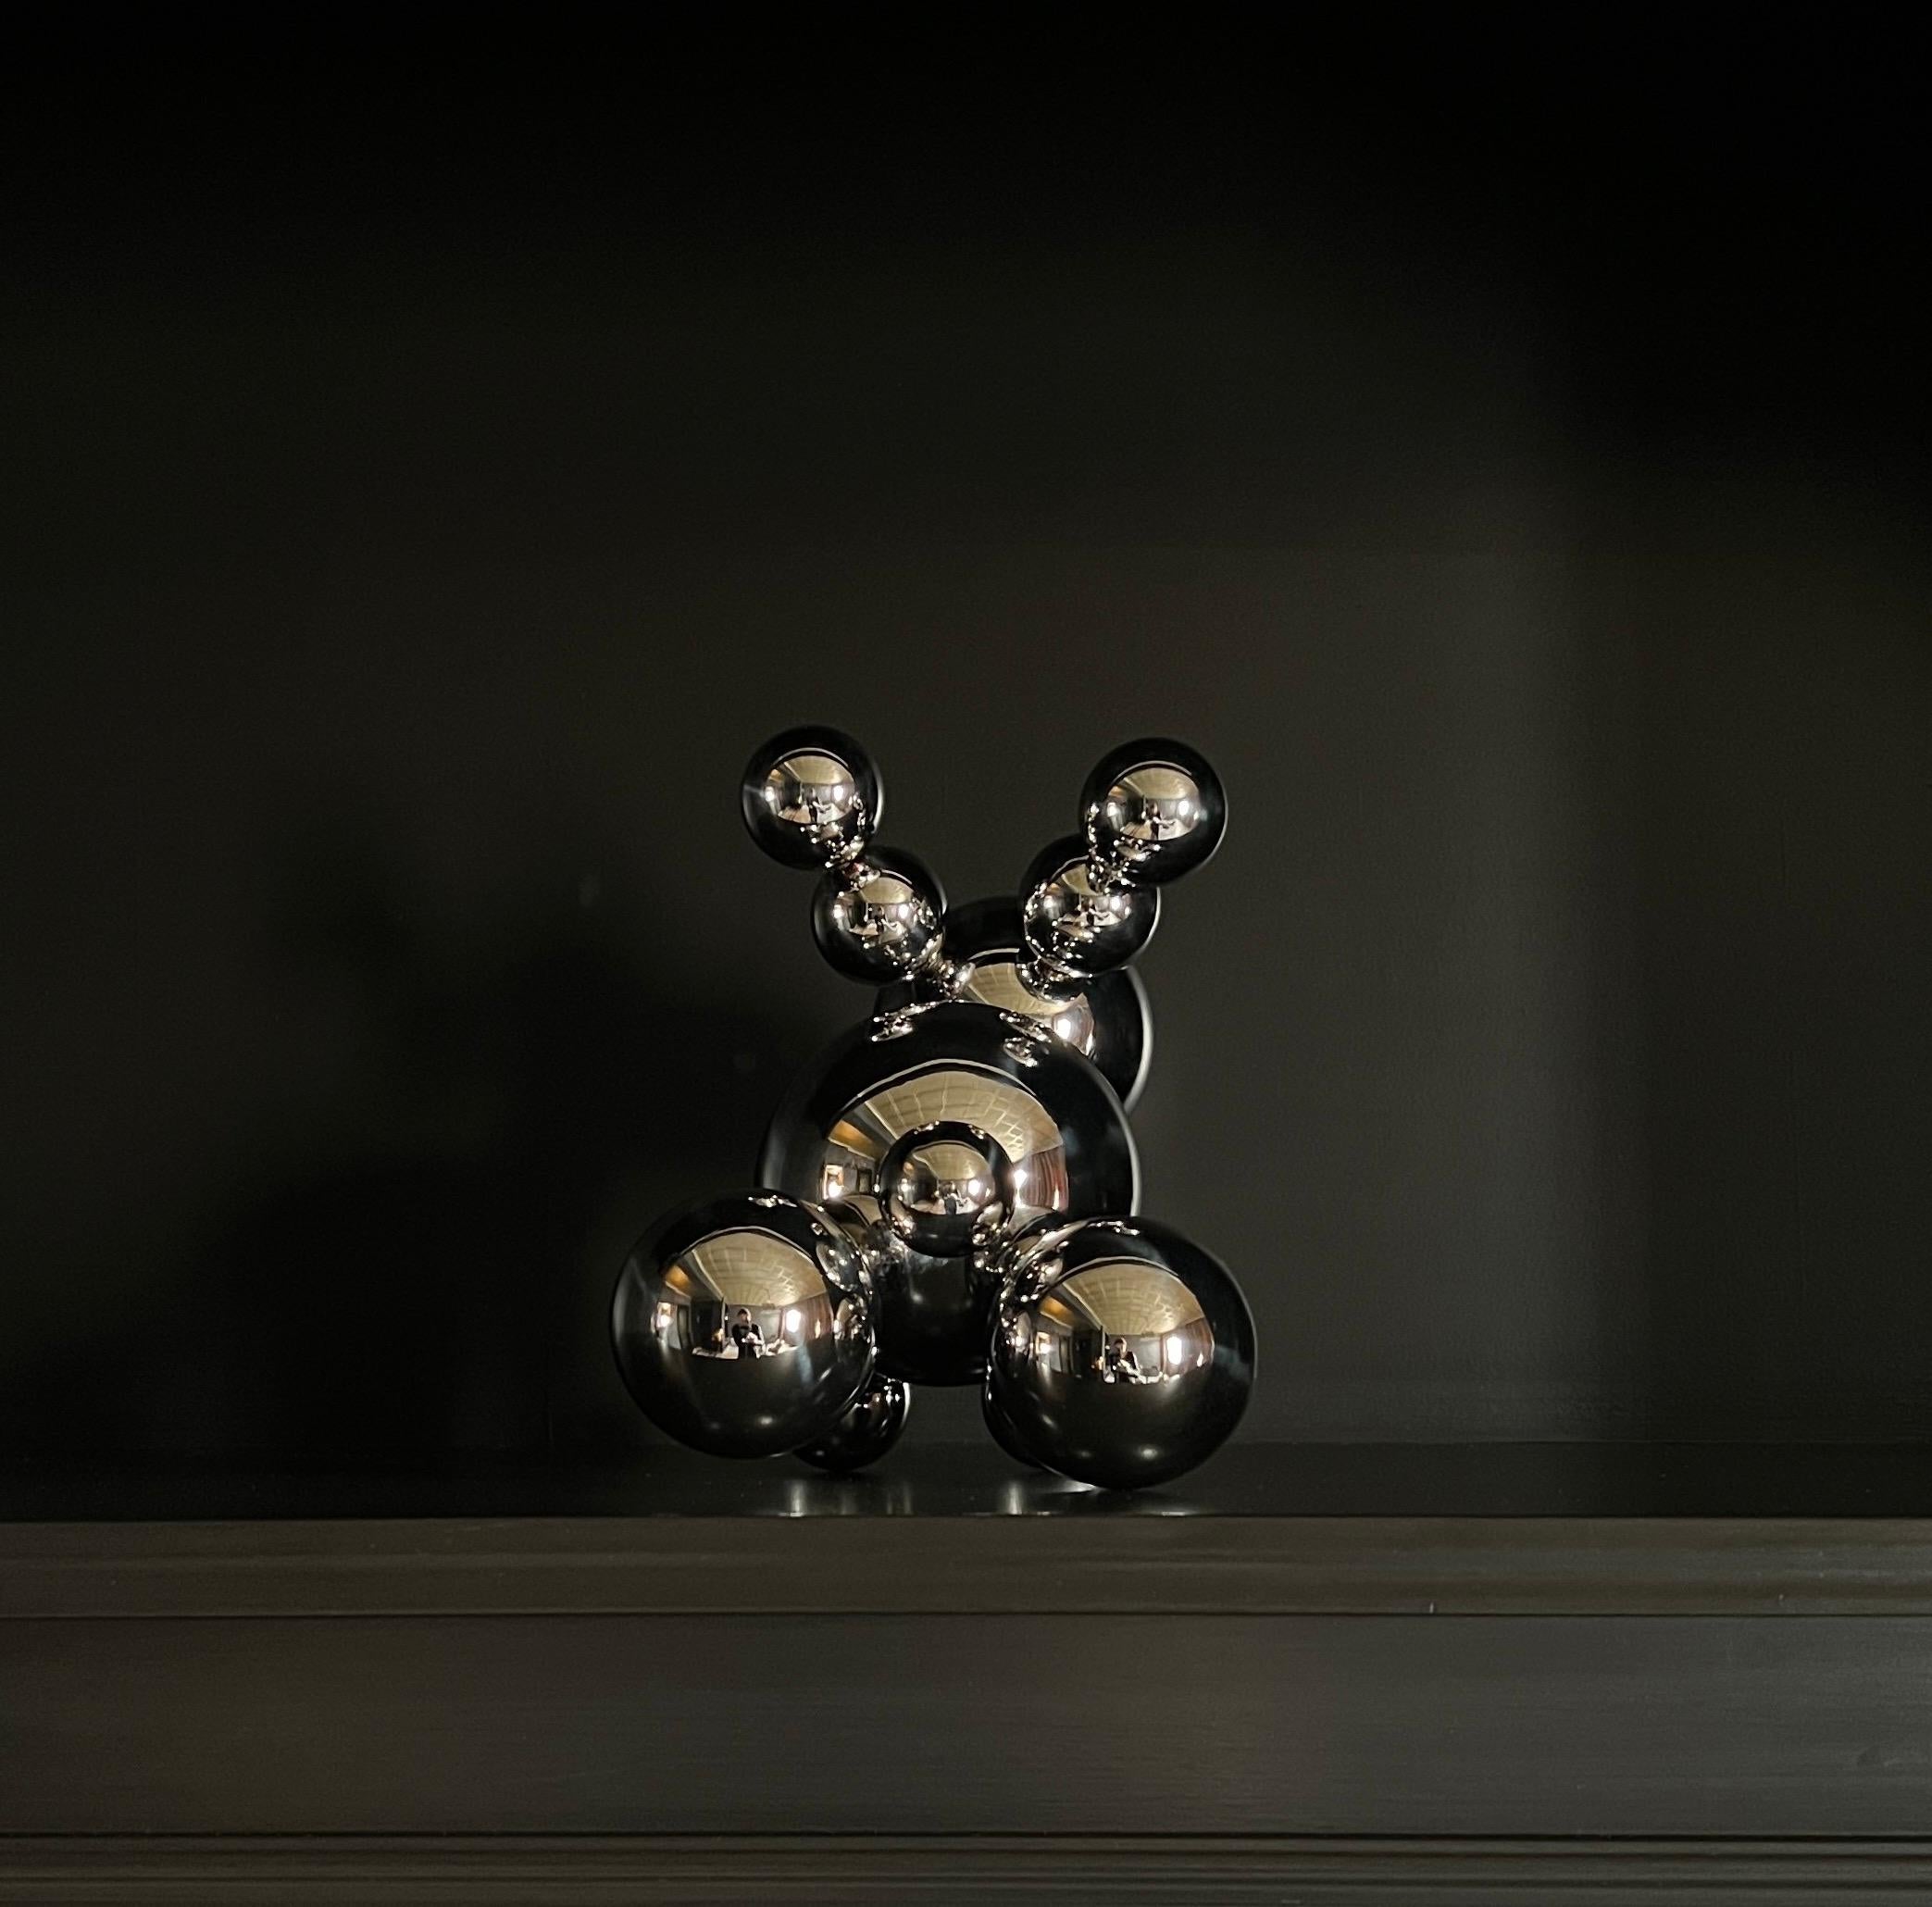 Stainless Steel Rabbit Bunny Robot 'Lee' Minimalistic Art 9